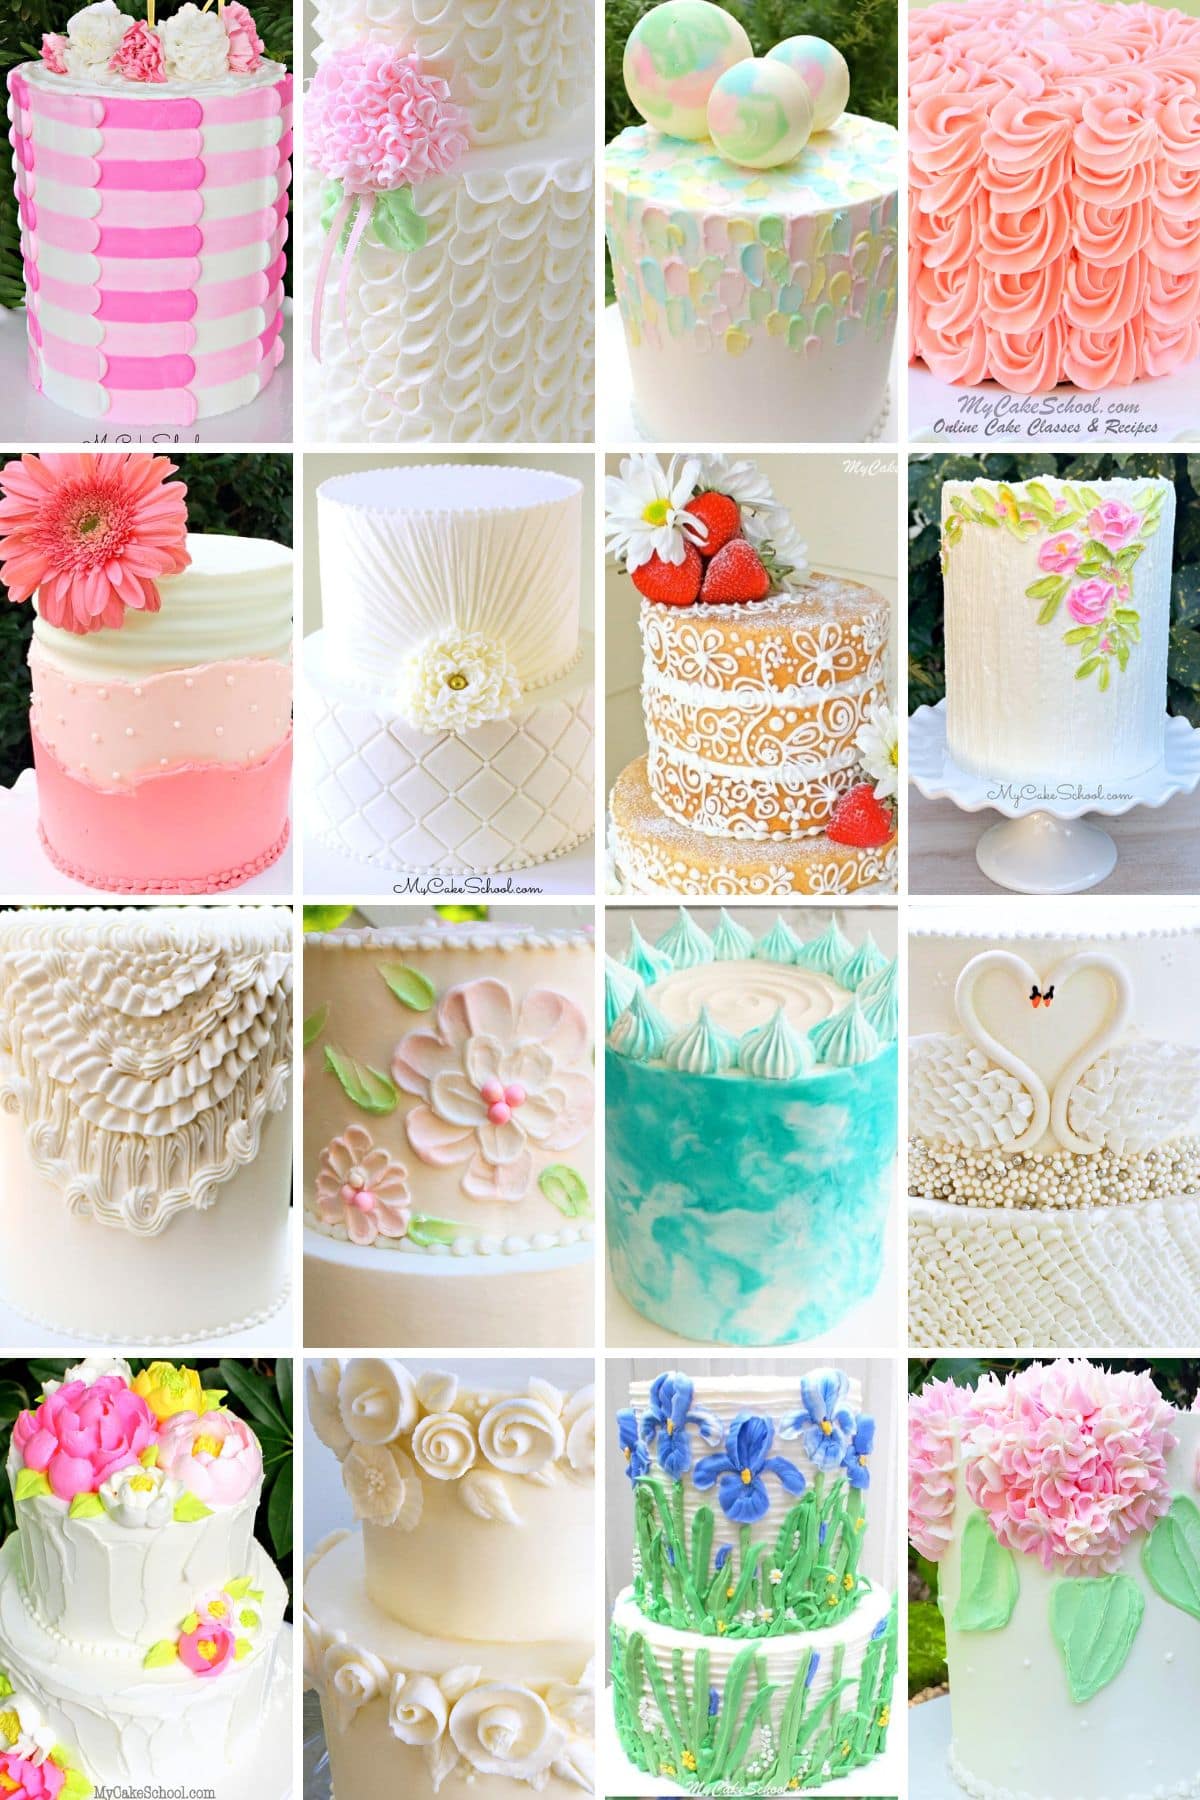 Photo grid of favorite buttercream cake design tutorials.